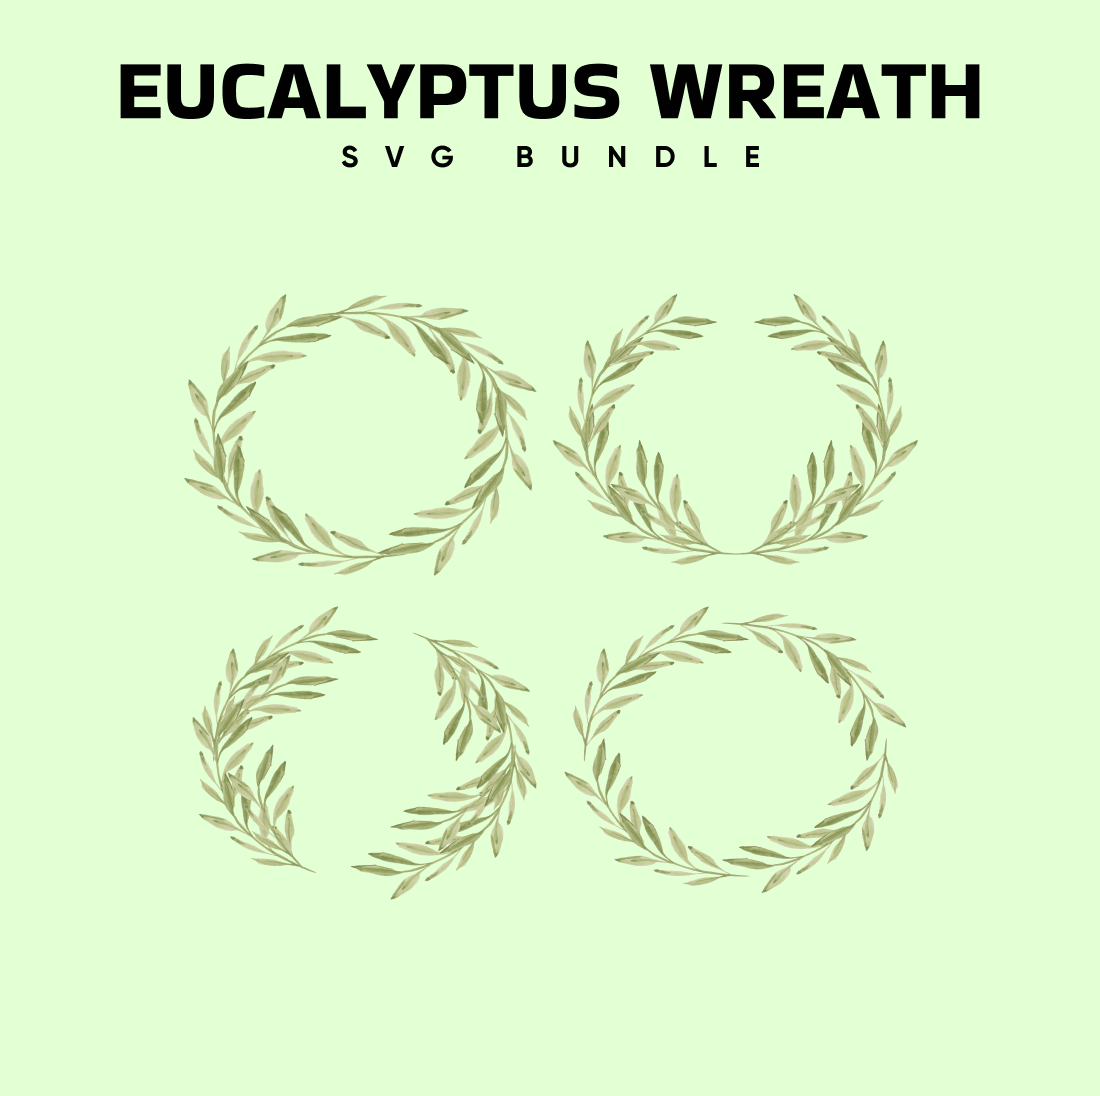 Images with eucalyptus wreath bundle.